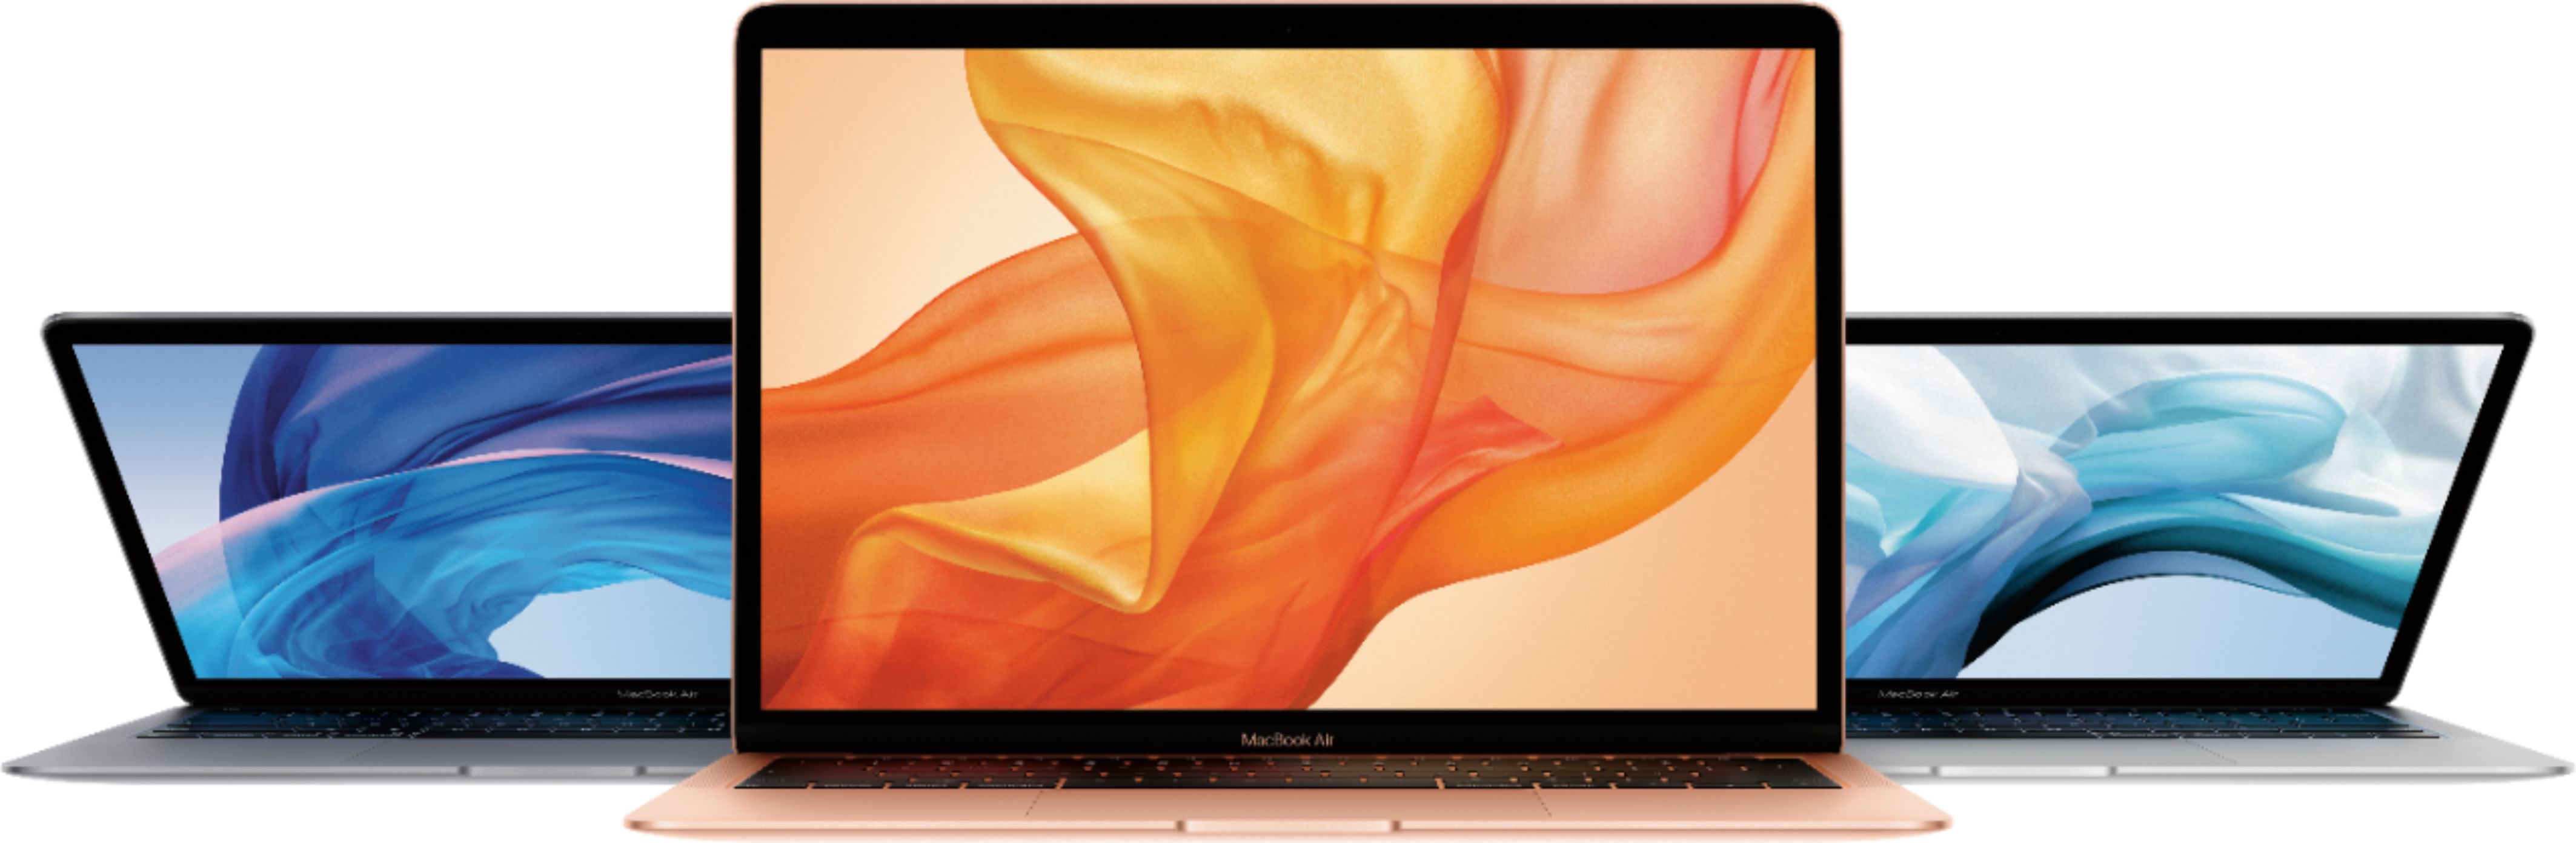 Odiseo piloto línea Best Buy: Apple MacBook Air 13.3" Retina Display Intel Core i5 8GB Memory  128GB Flash Storage Space Gray MRE82LL/A